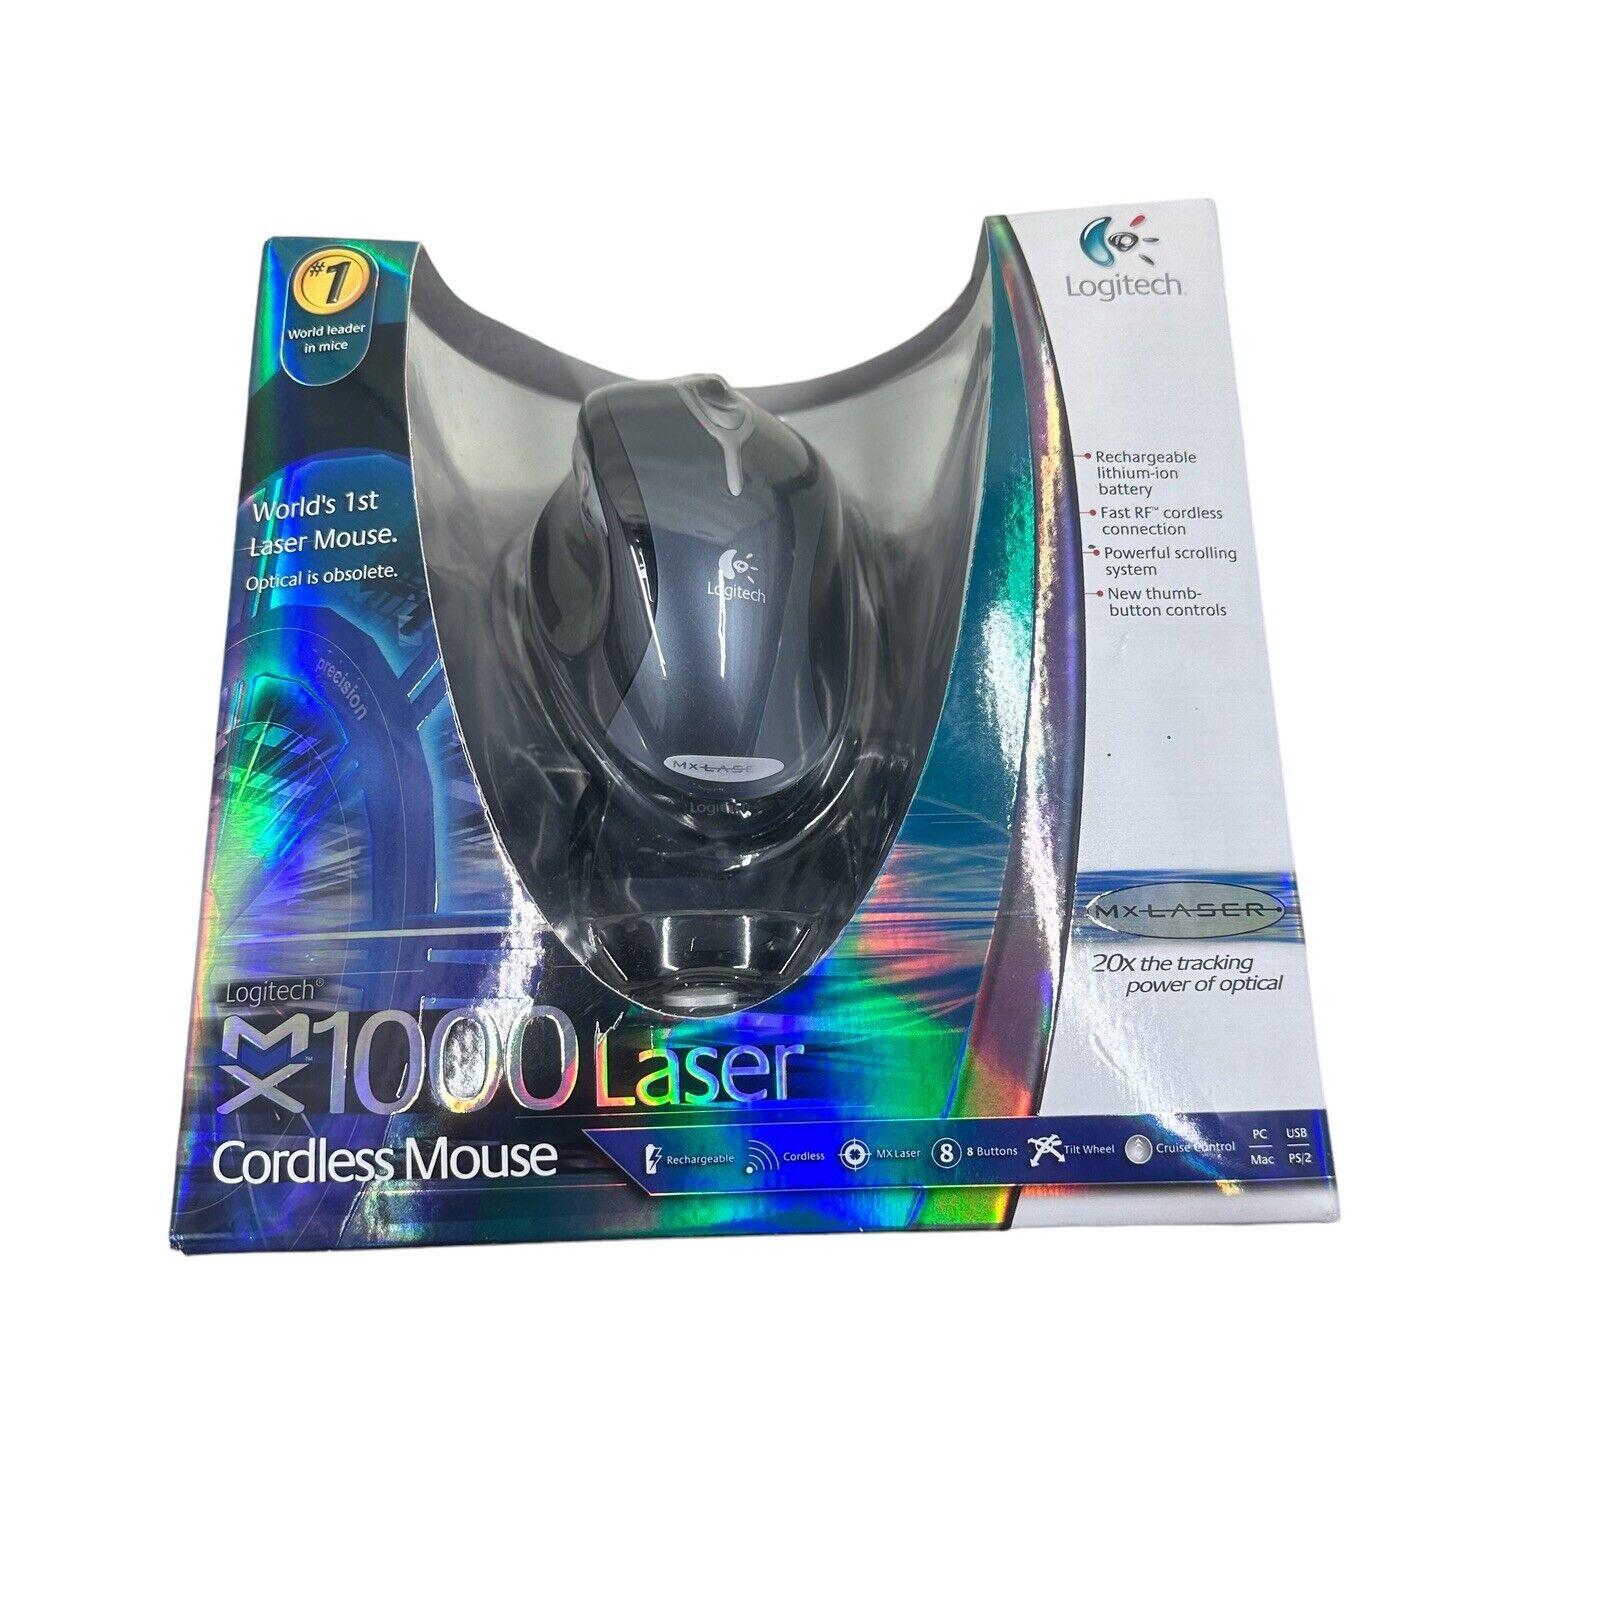 Logitech MX1000 Laser Cordless Wireless Mouse NOS Brand New Sealed